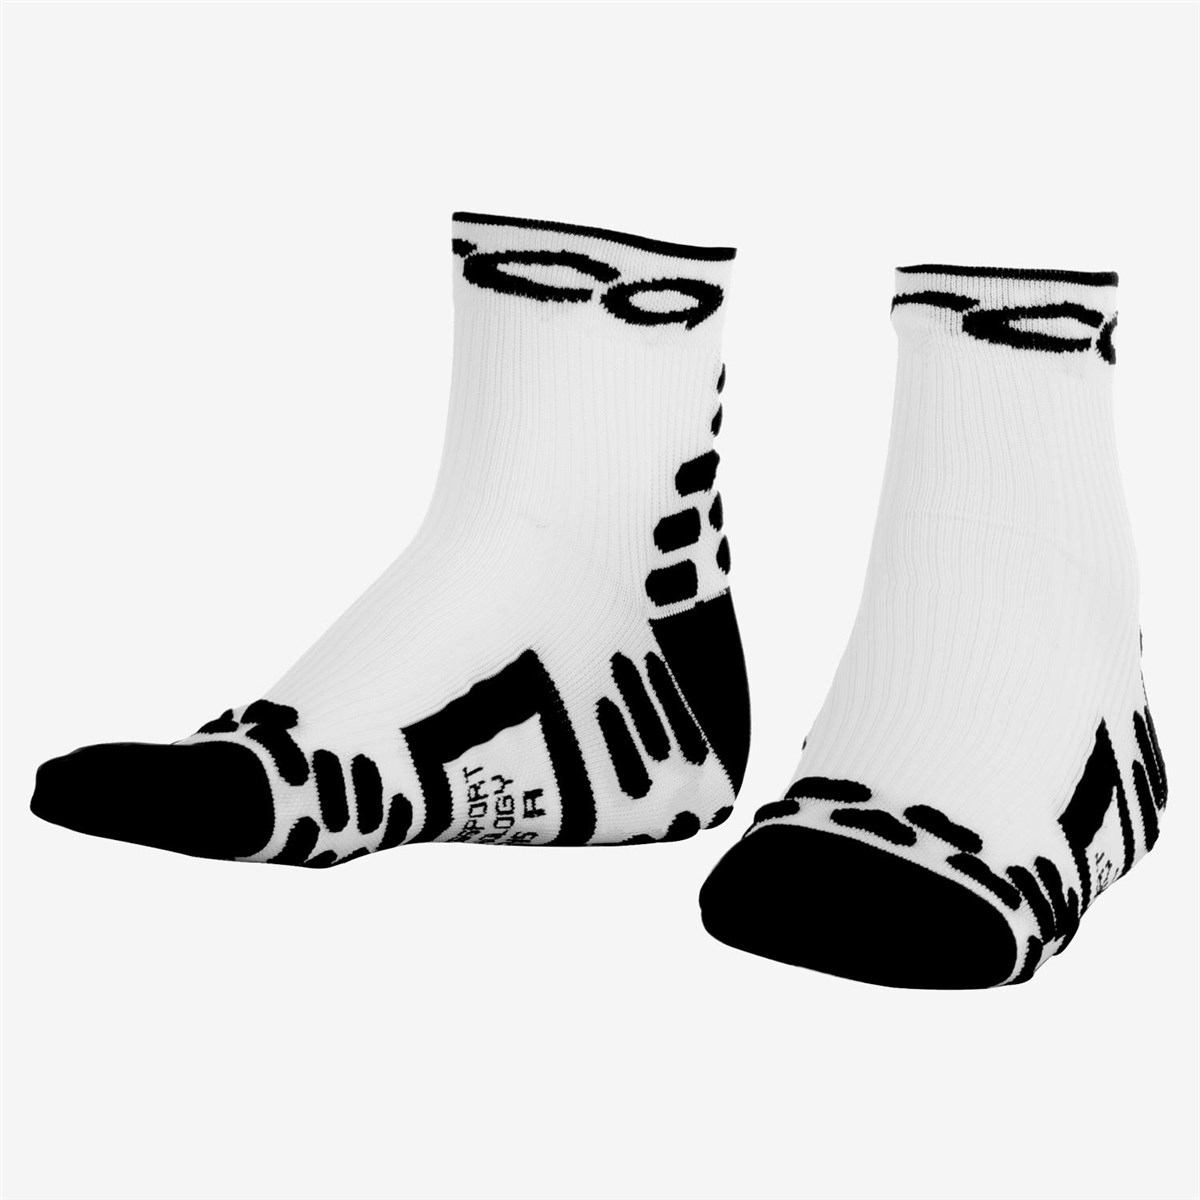 Orca Compression Racing Socks product image